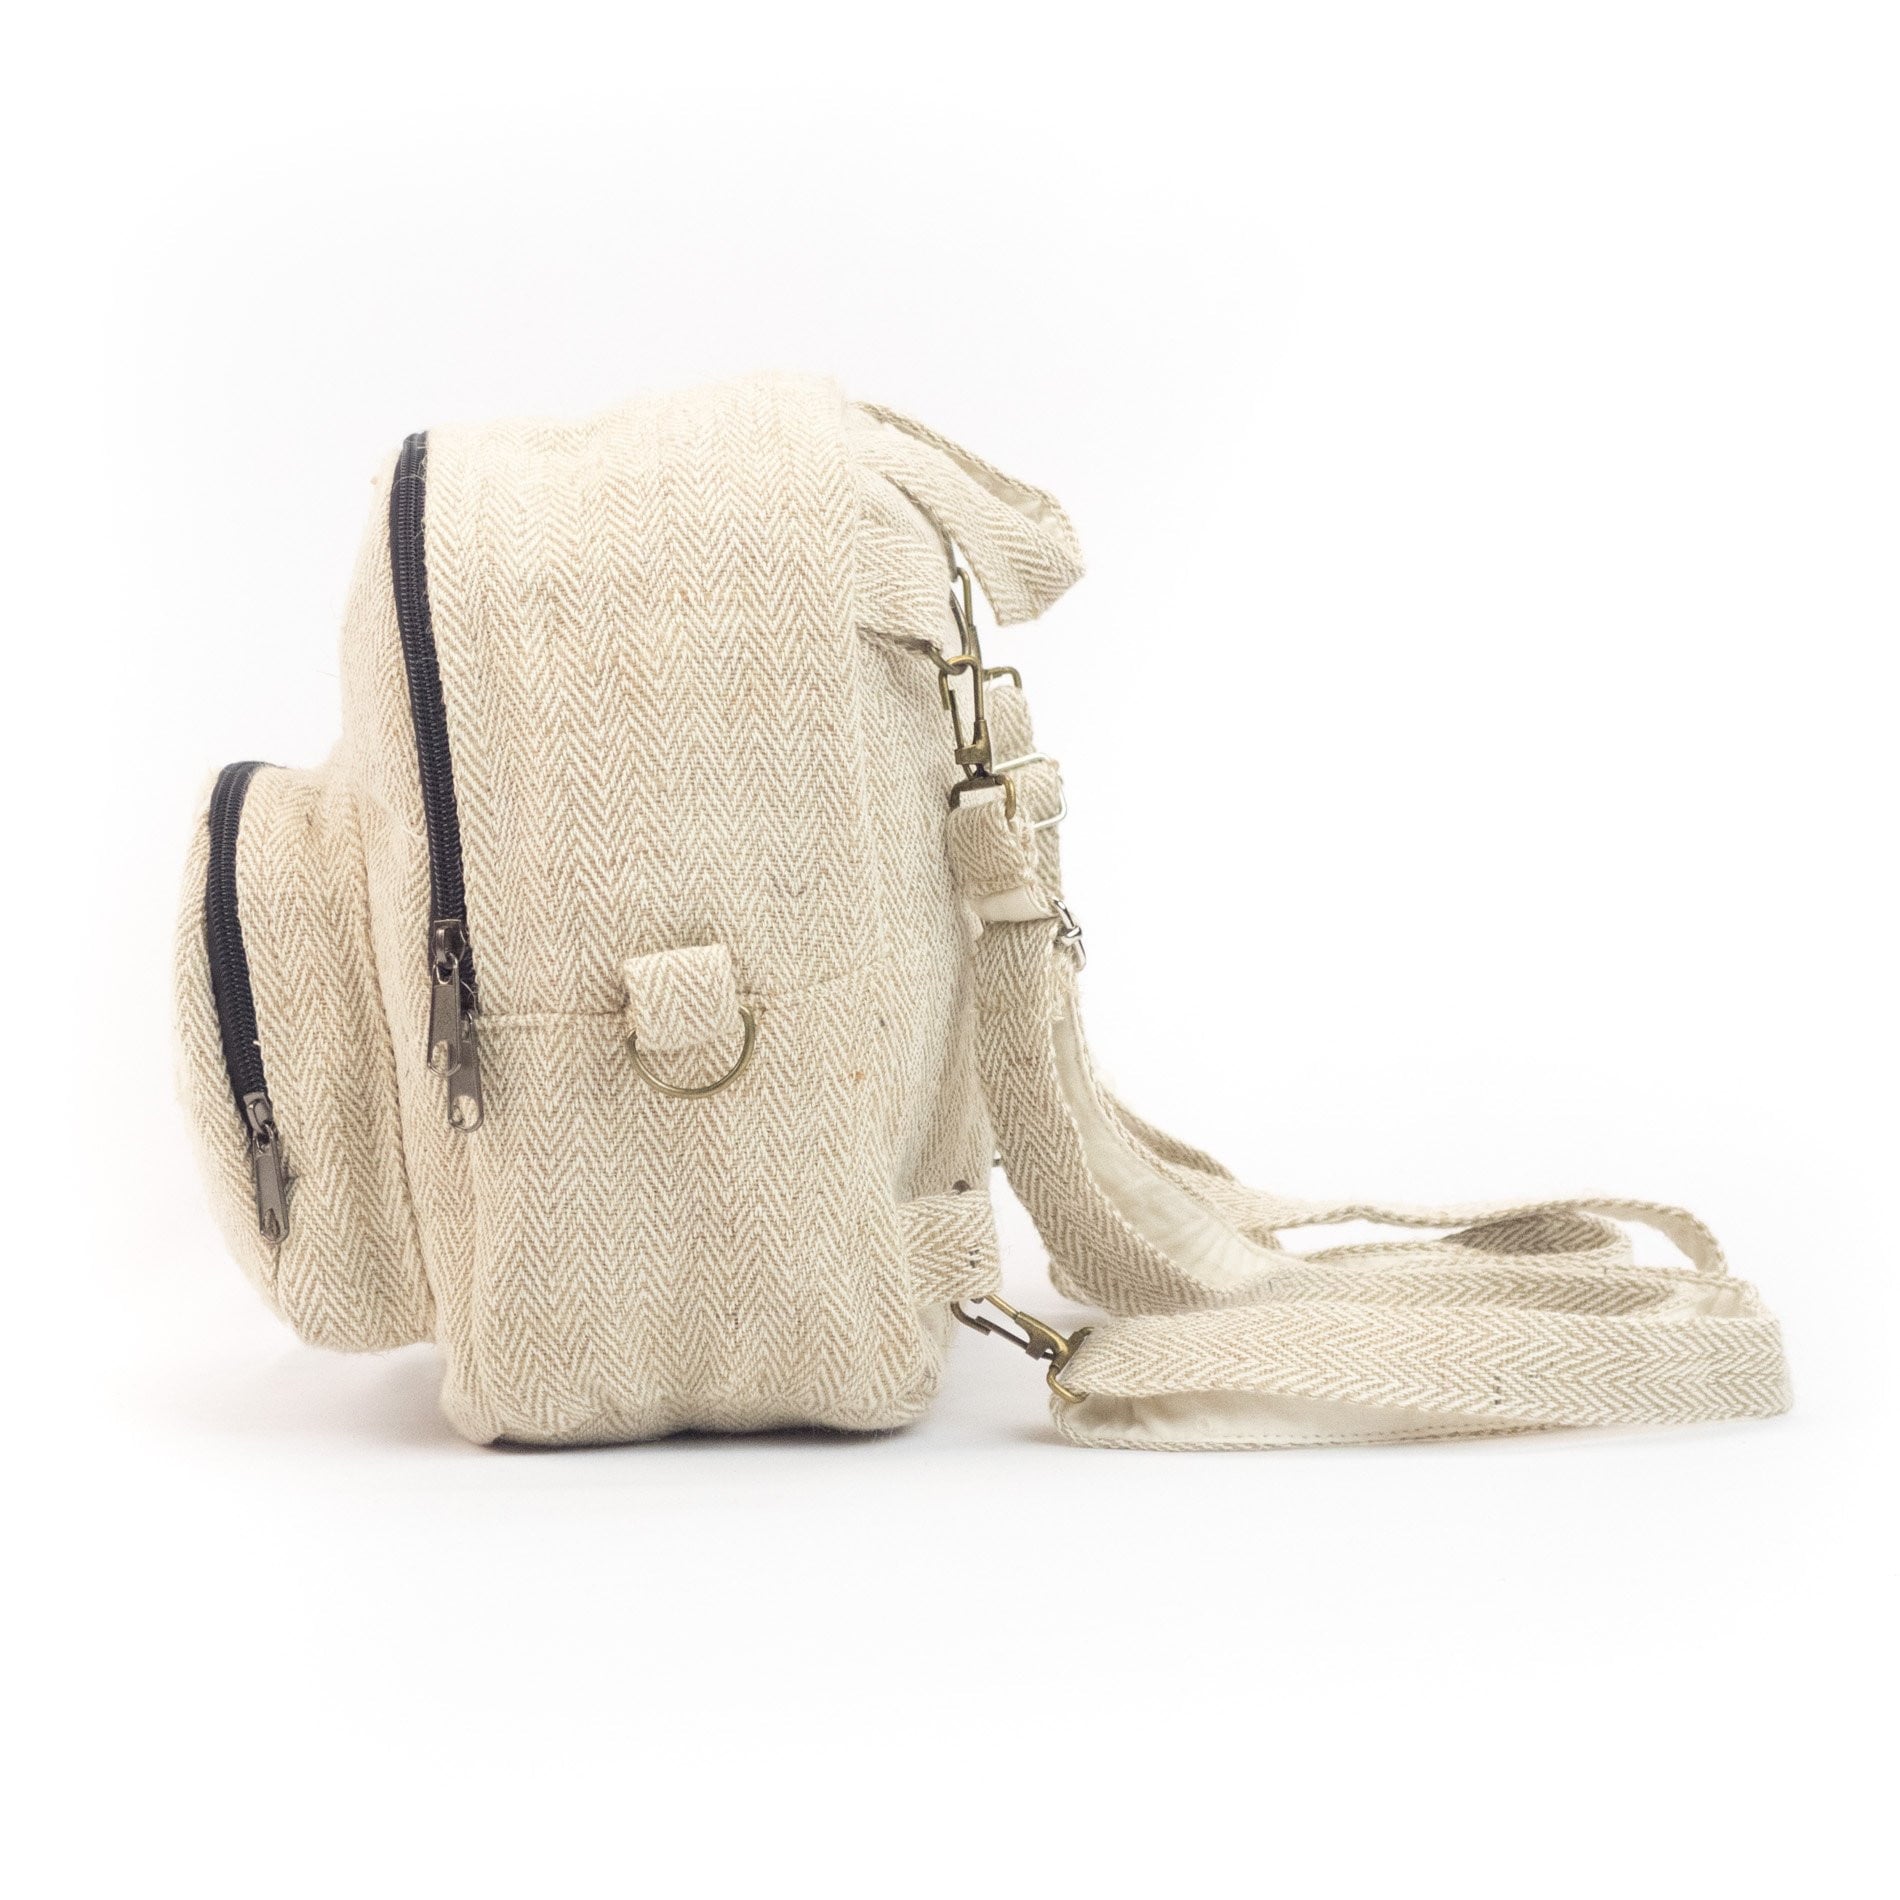 Hemp 2 in 1 mini backpack, natural - Hempalaya